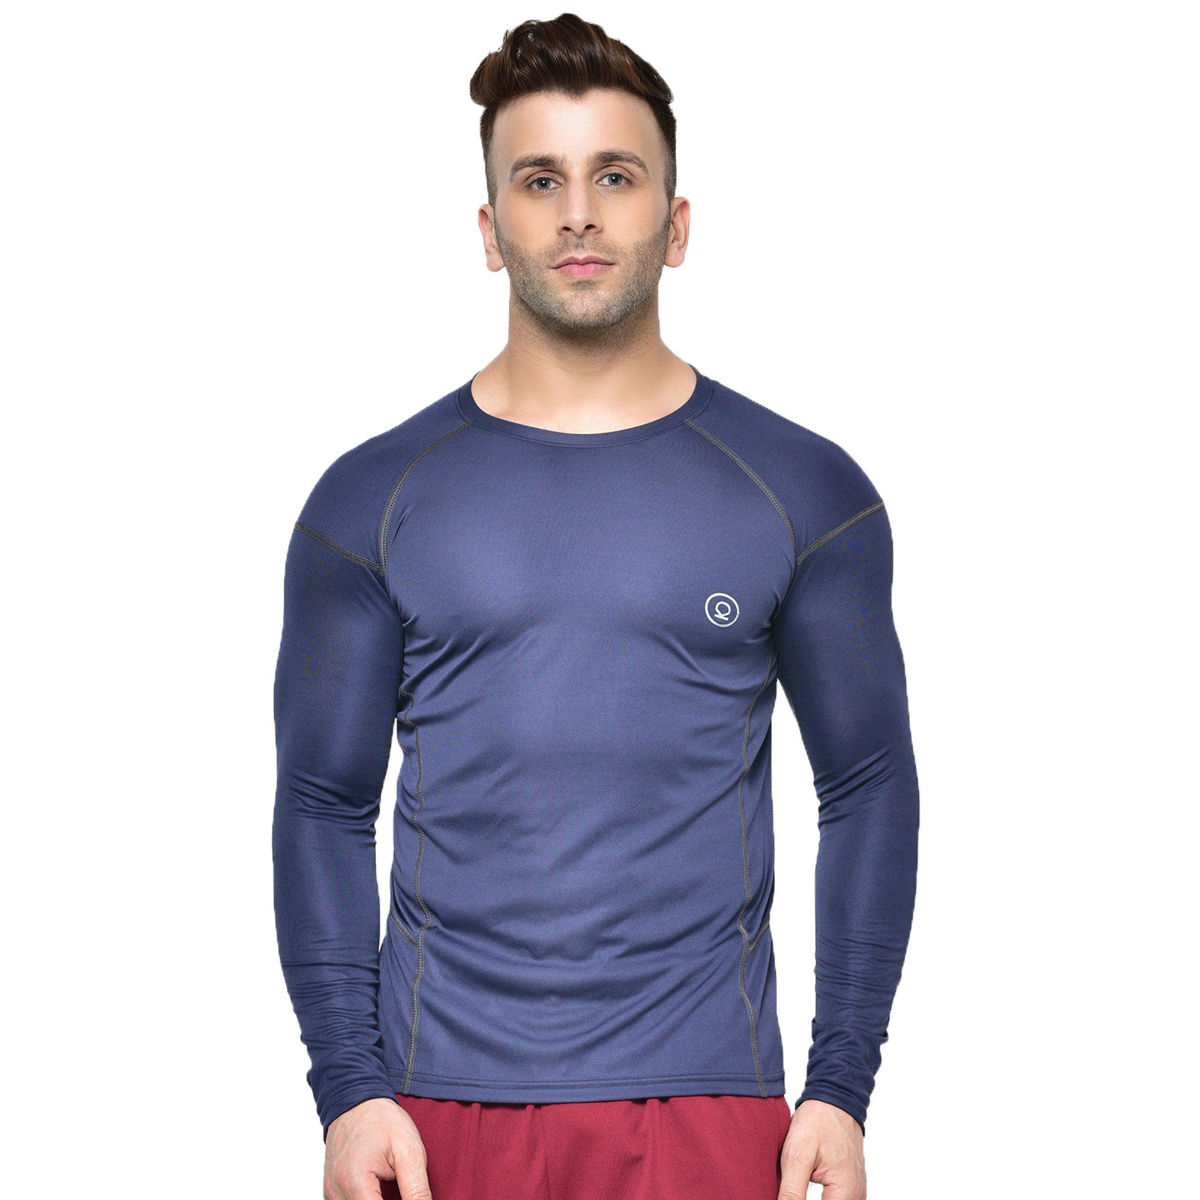 CHKOKKO Men Round Neck Regular Dry Fit Gym Sports T-Shirt (XL)